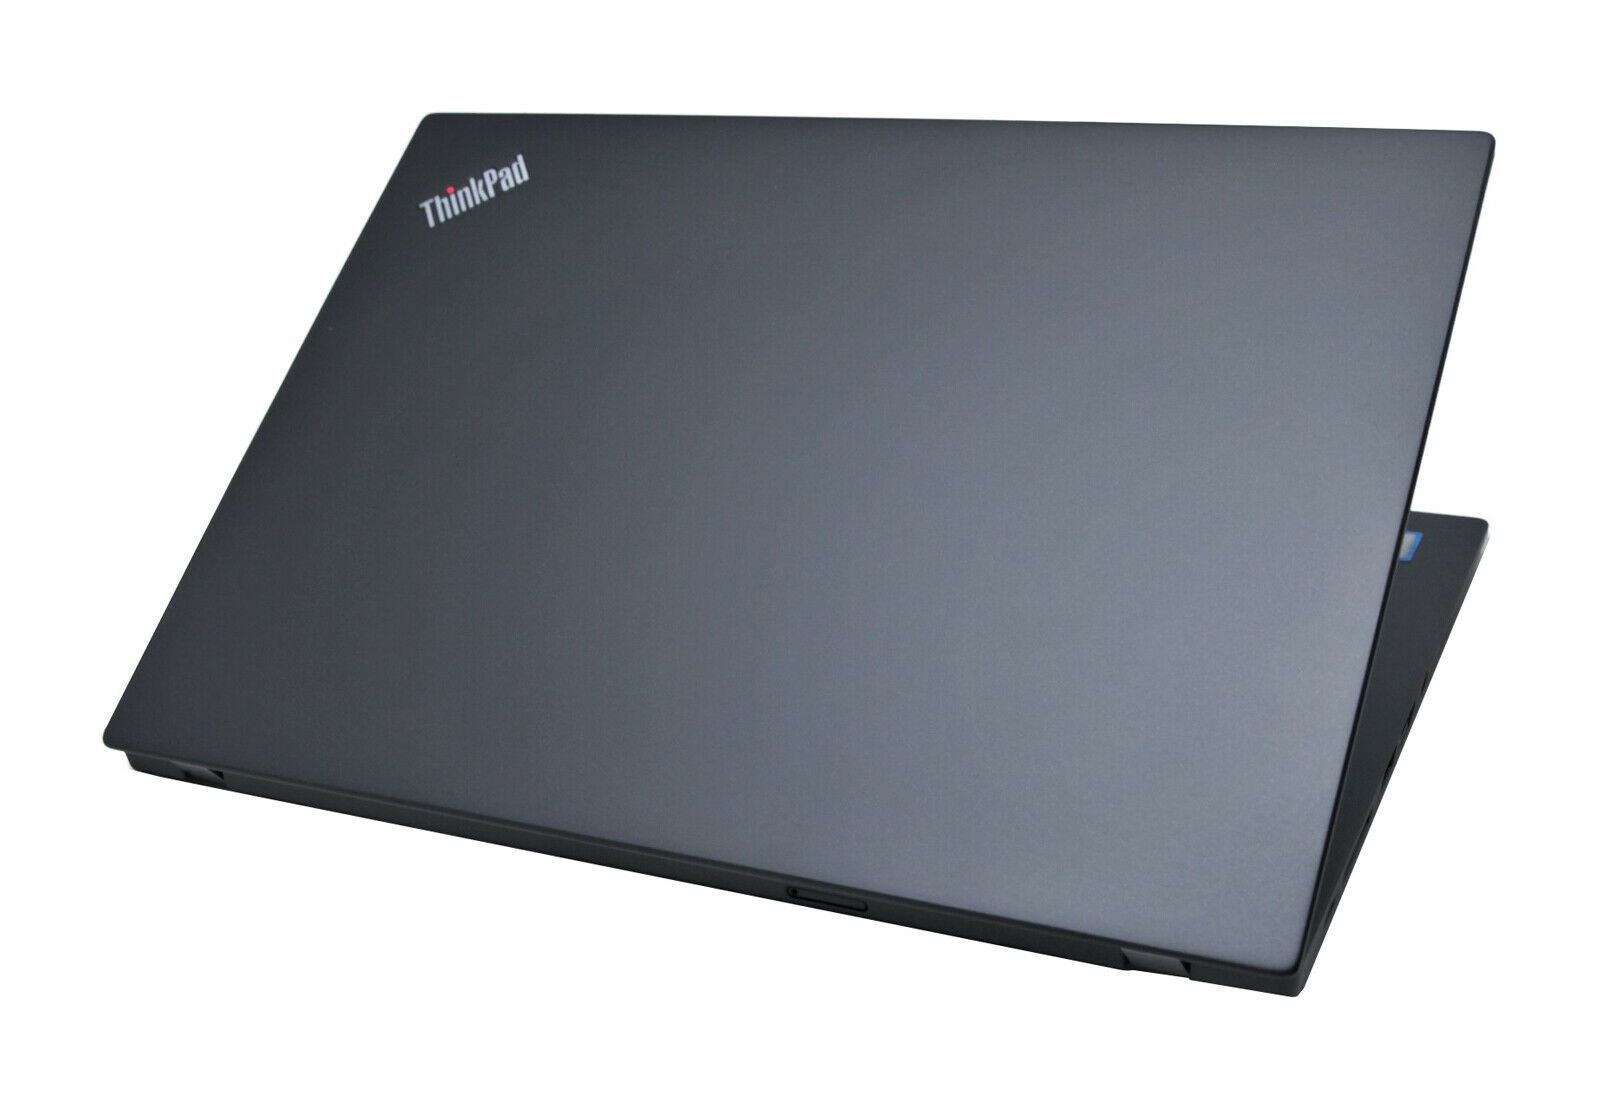 Lenovo Thinkpad X280 UltraBook: Core i7-8650U, 512GB, 8GB RAM, Warranty, 1.2Kg - CruiseTech